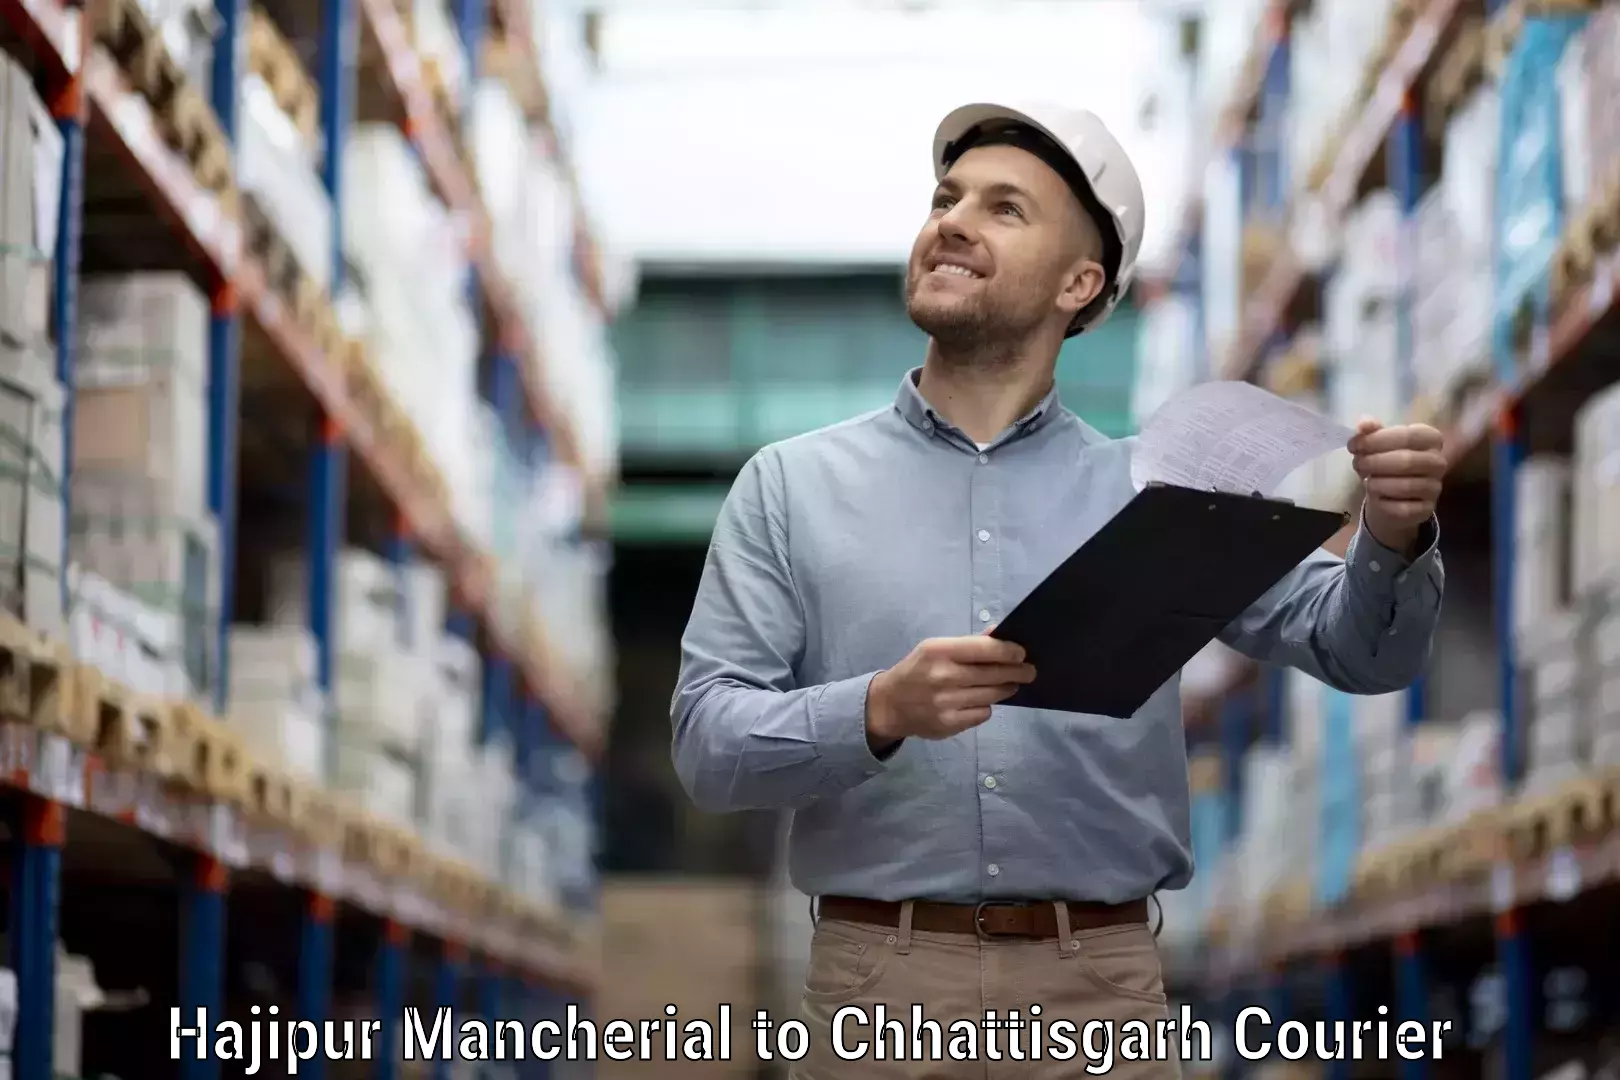 Reliable courier service Hajipur Mancherial to Bijapur Chhattisgarh